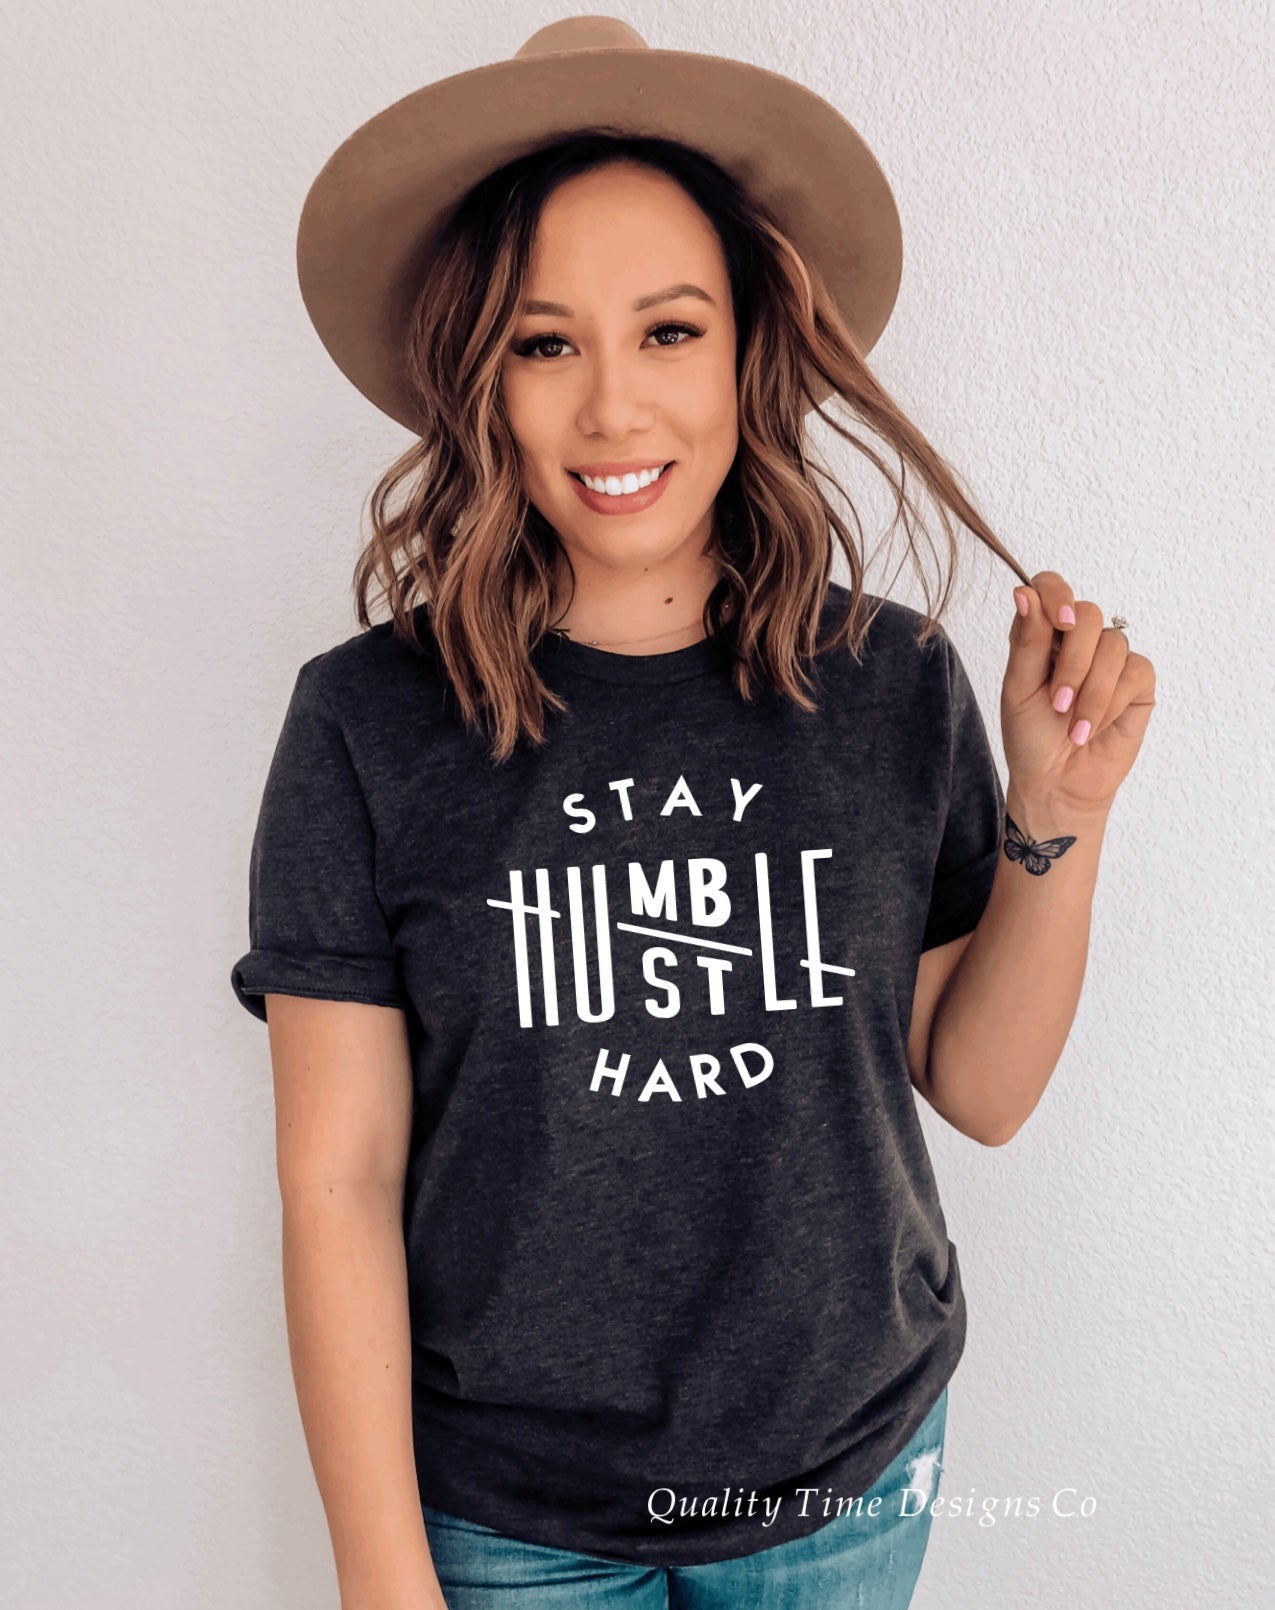 Stay humble hustle hard t-shirt 